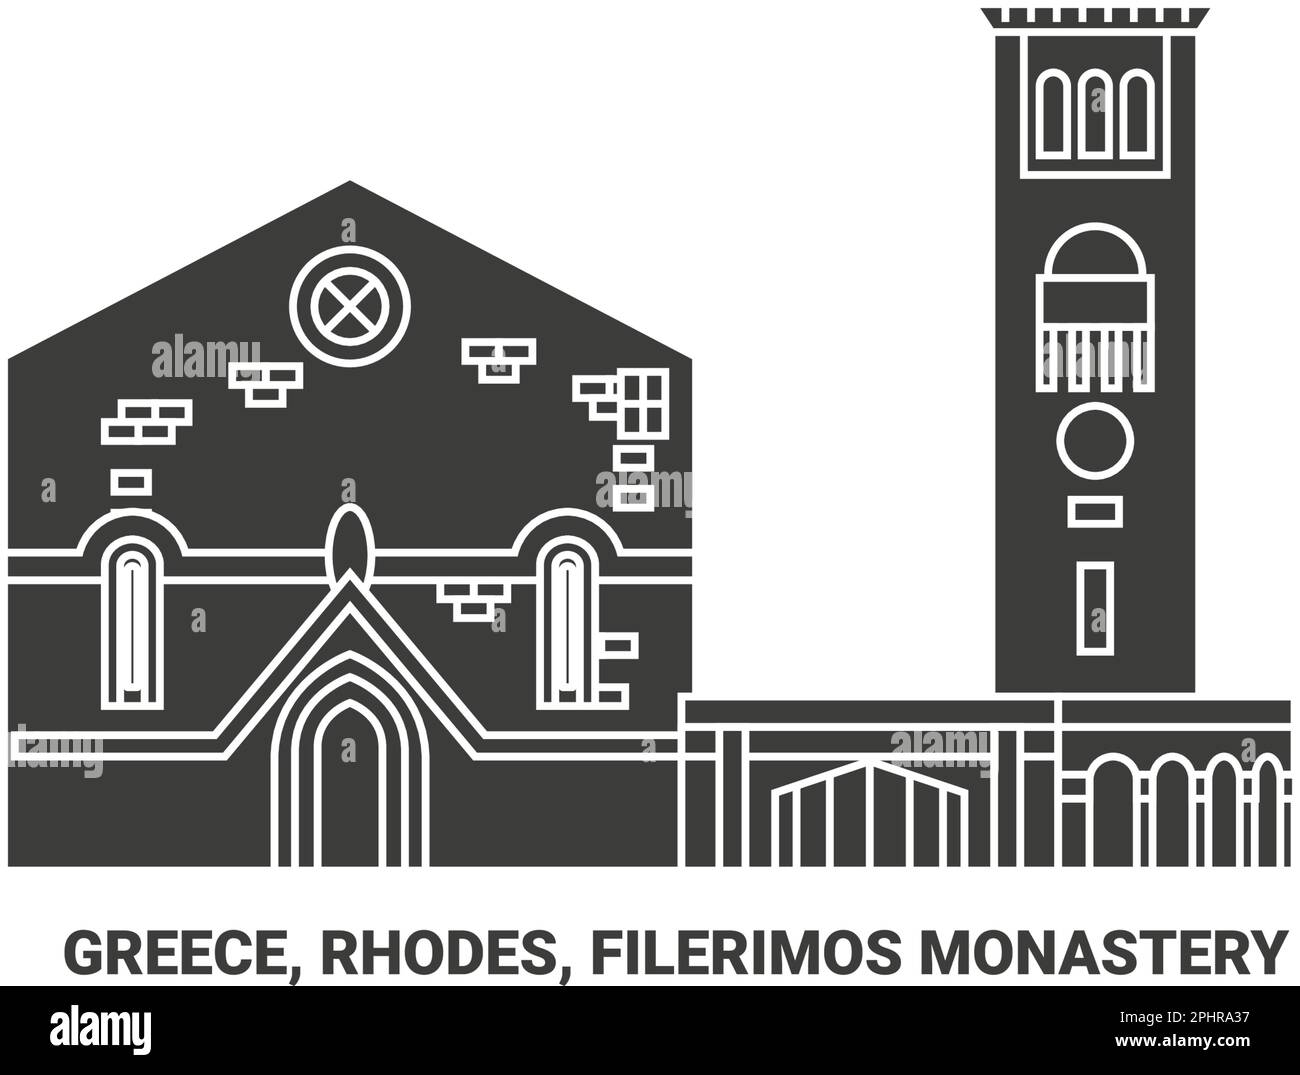 Greece, Rhodes, Filerimos Monastery travel landmark vector illustration Stock Vector